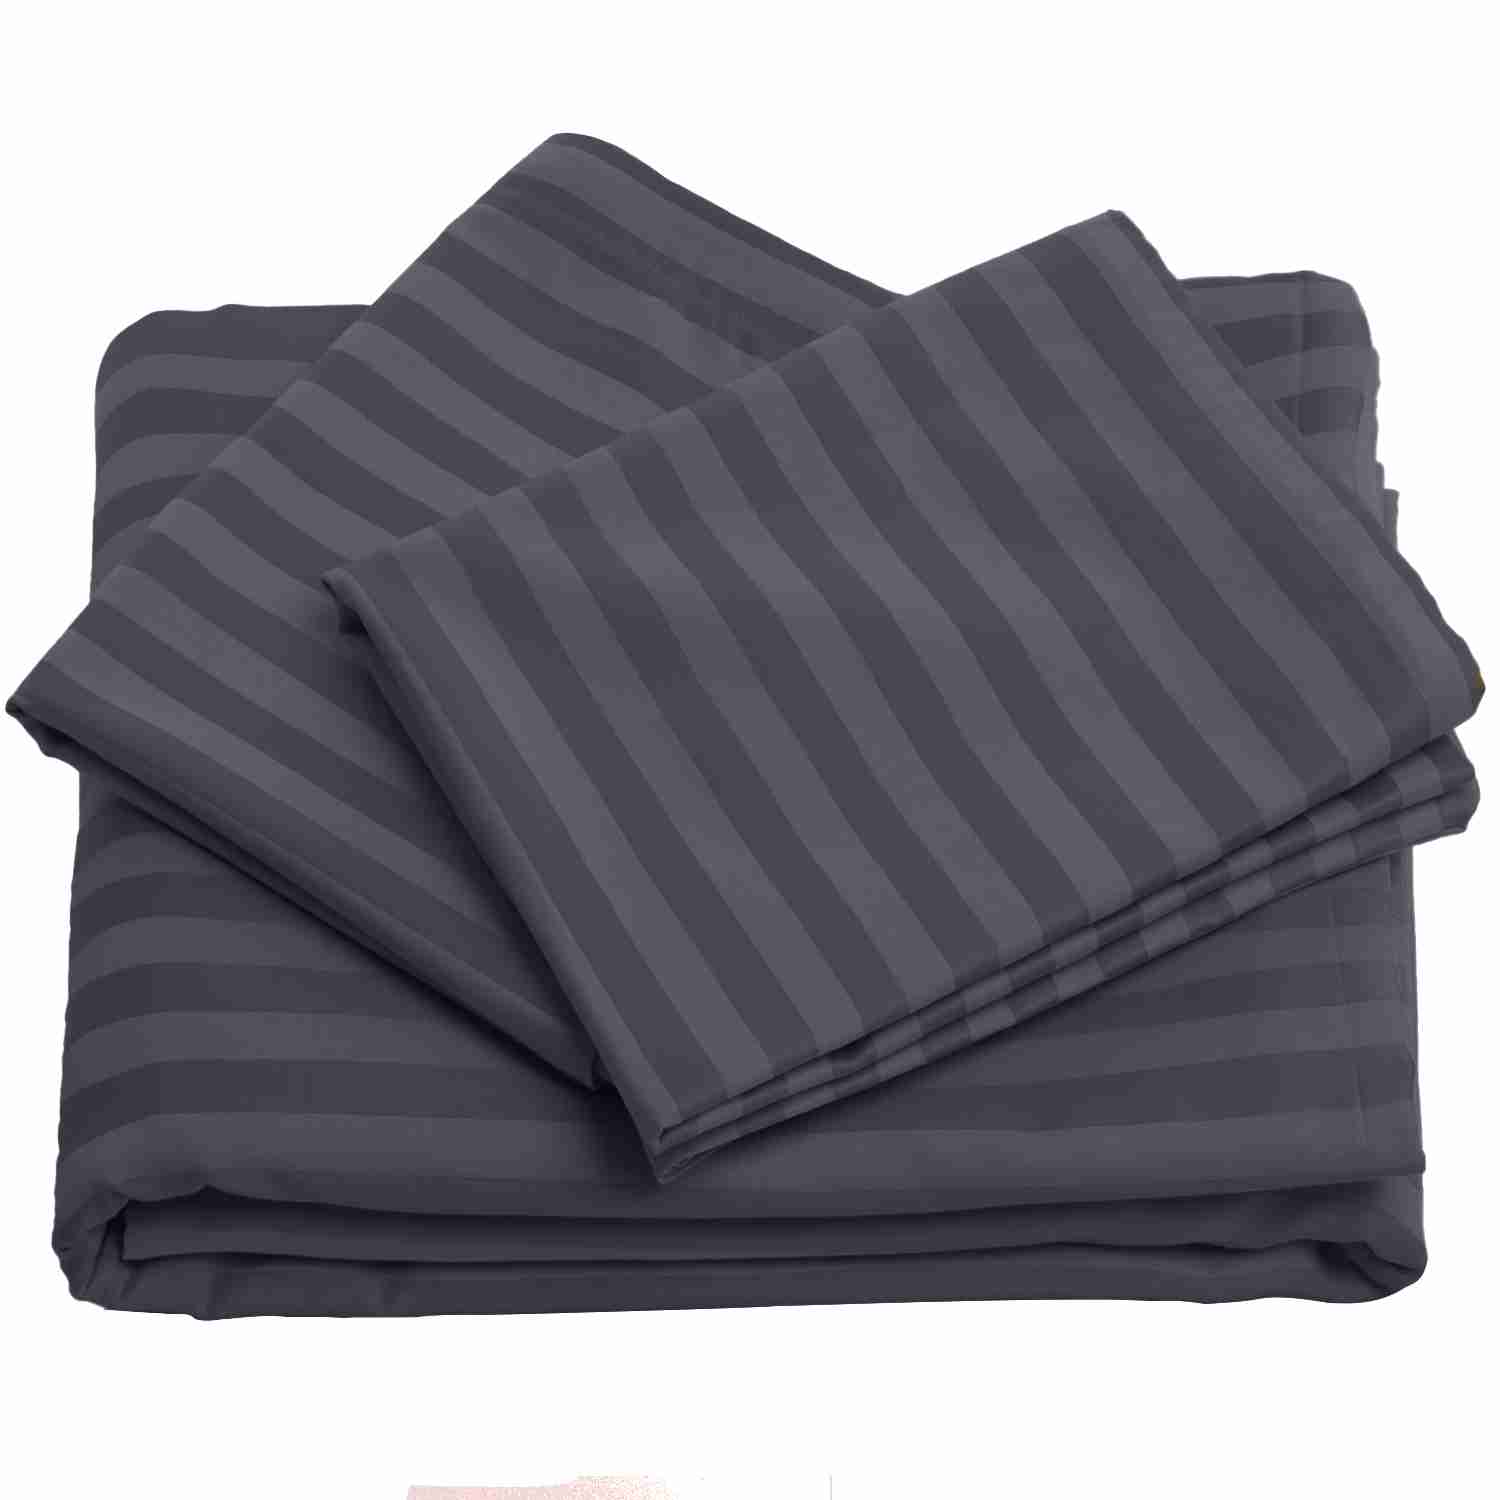 100-cotton-duvet-cover-set-damask-striped-sateen with cash back rebate